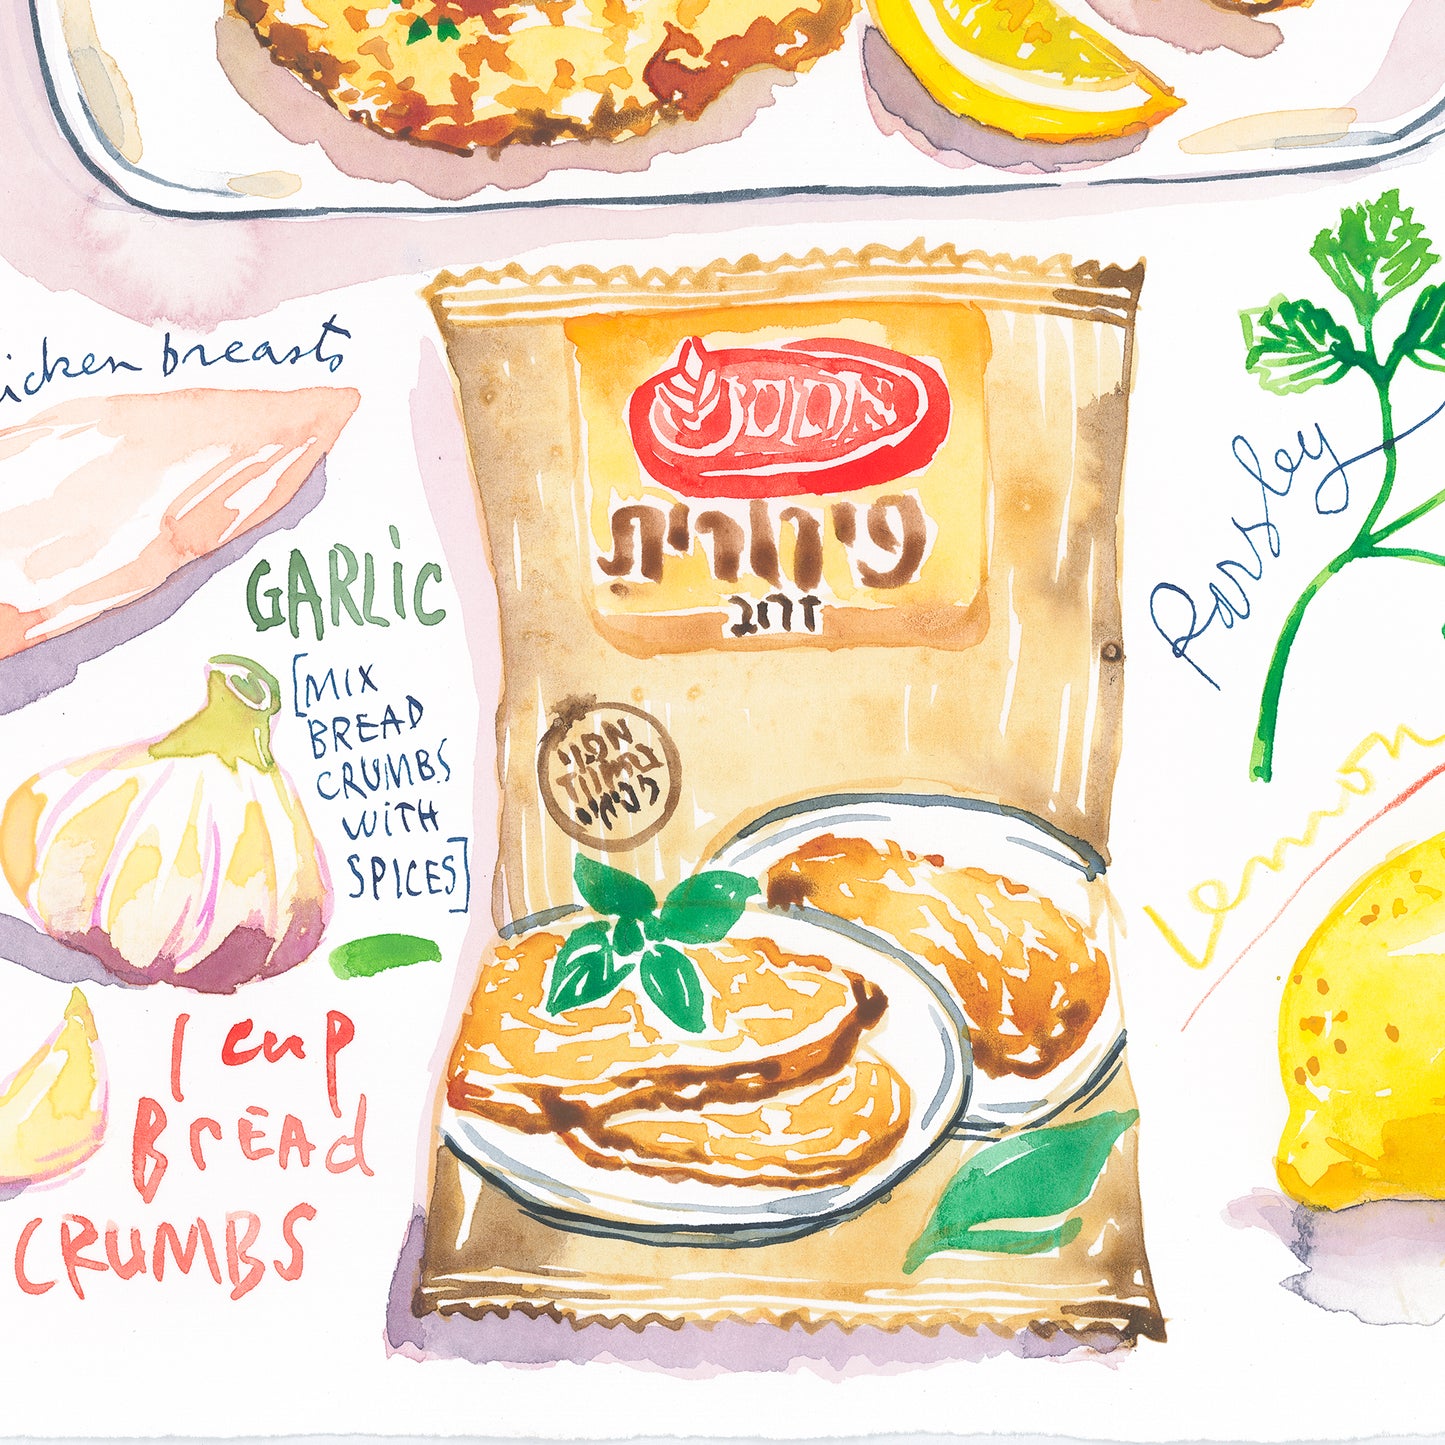 Israeli Schnitzel recipe. Original watercolor painting